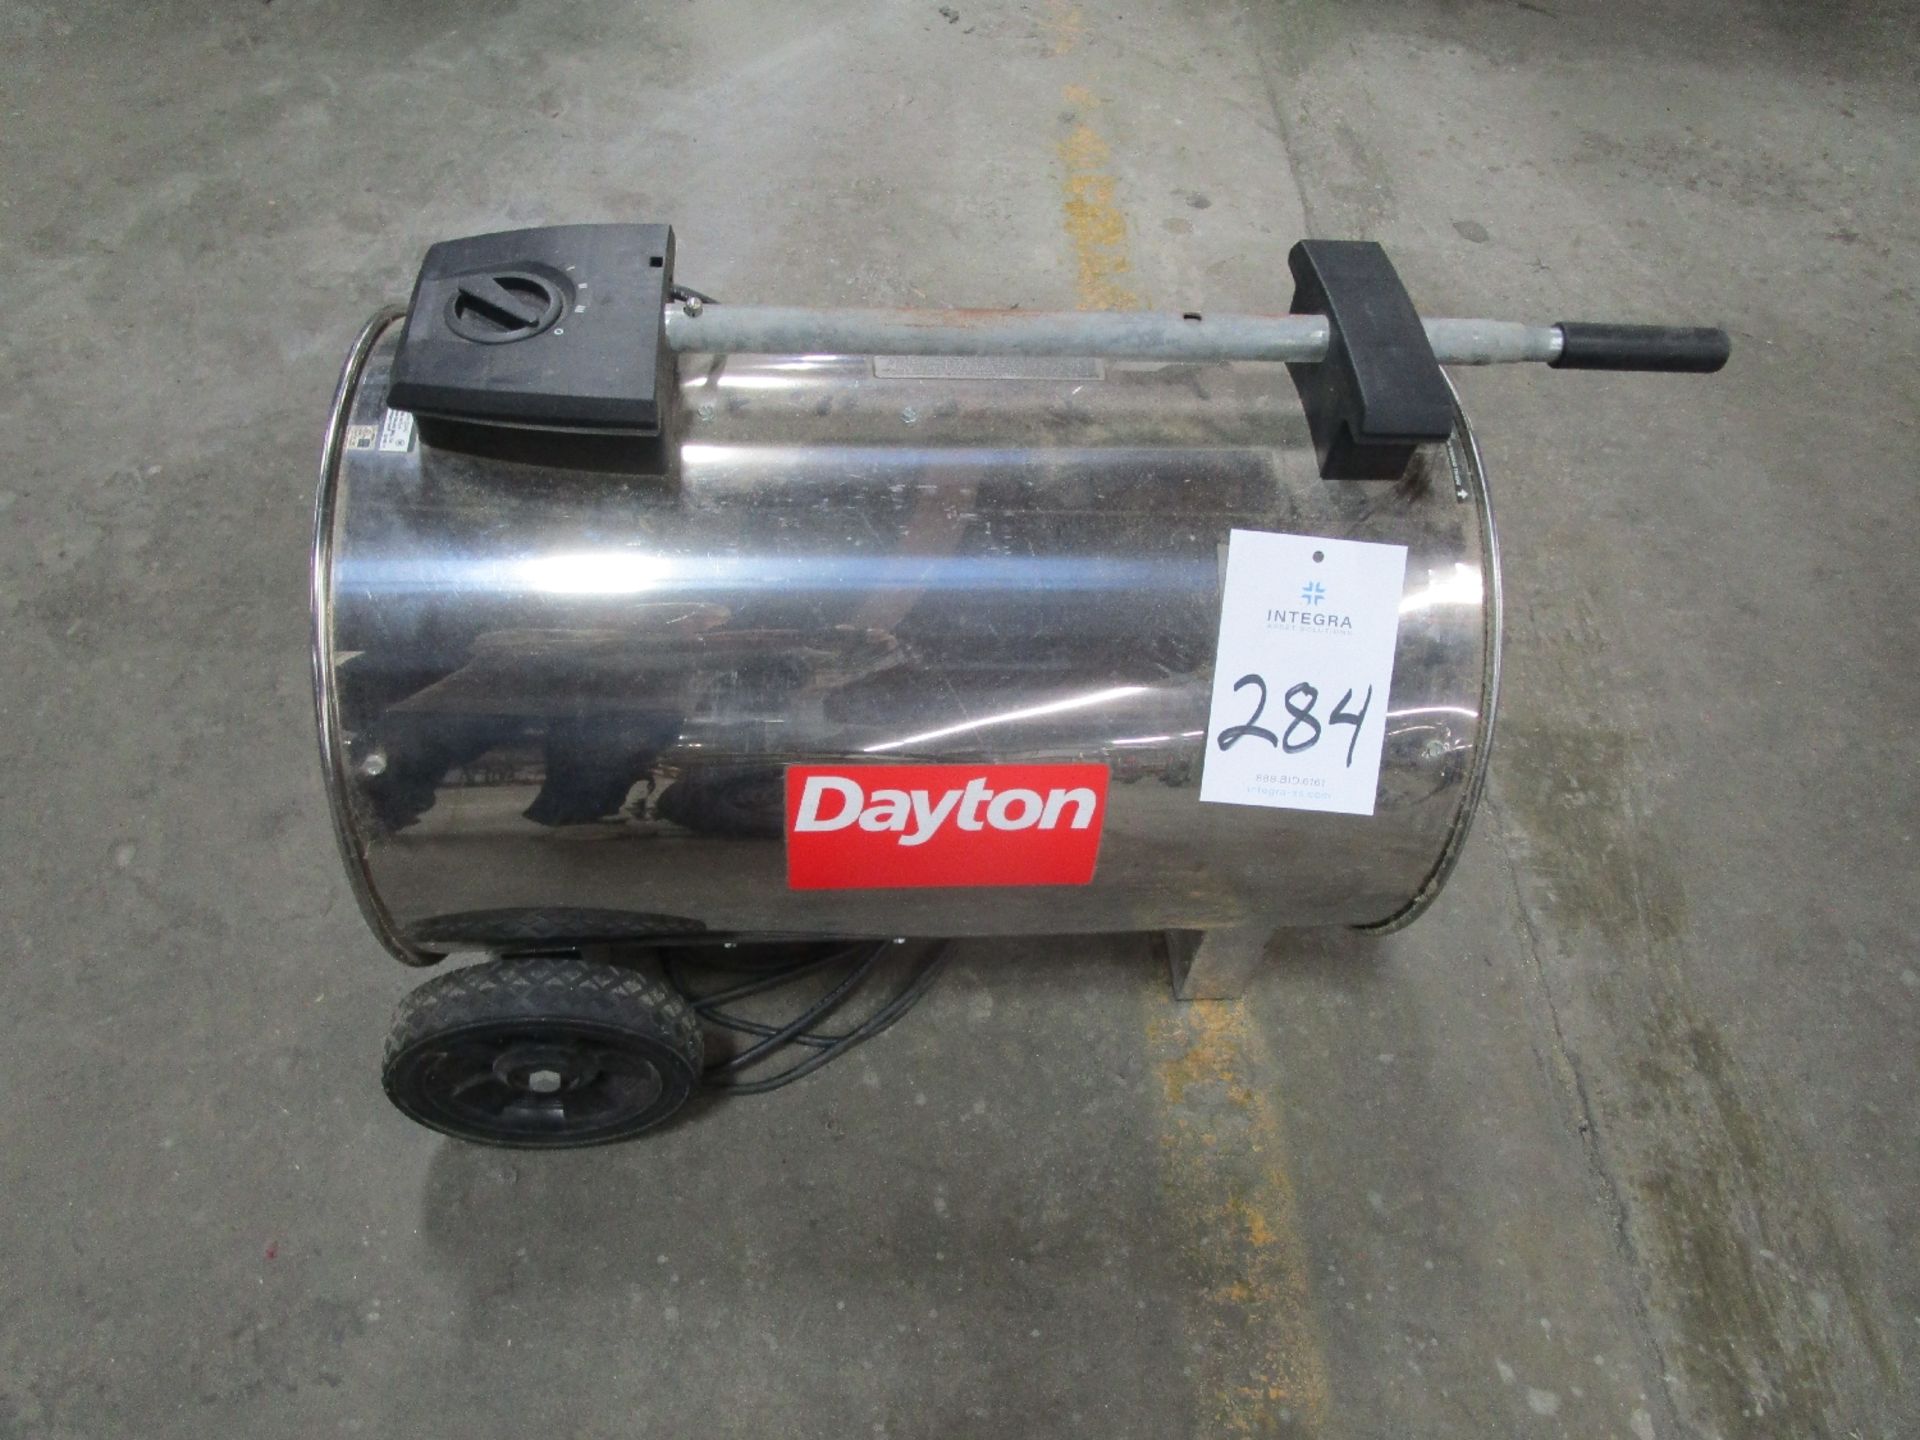 Dayton 20VD63 Carpet Dryer